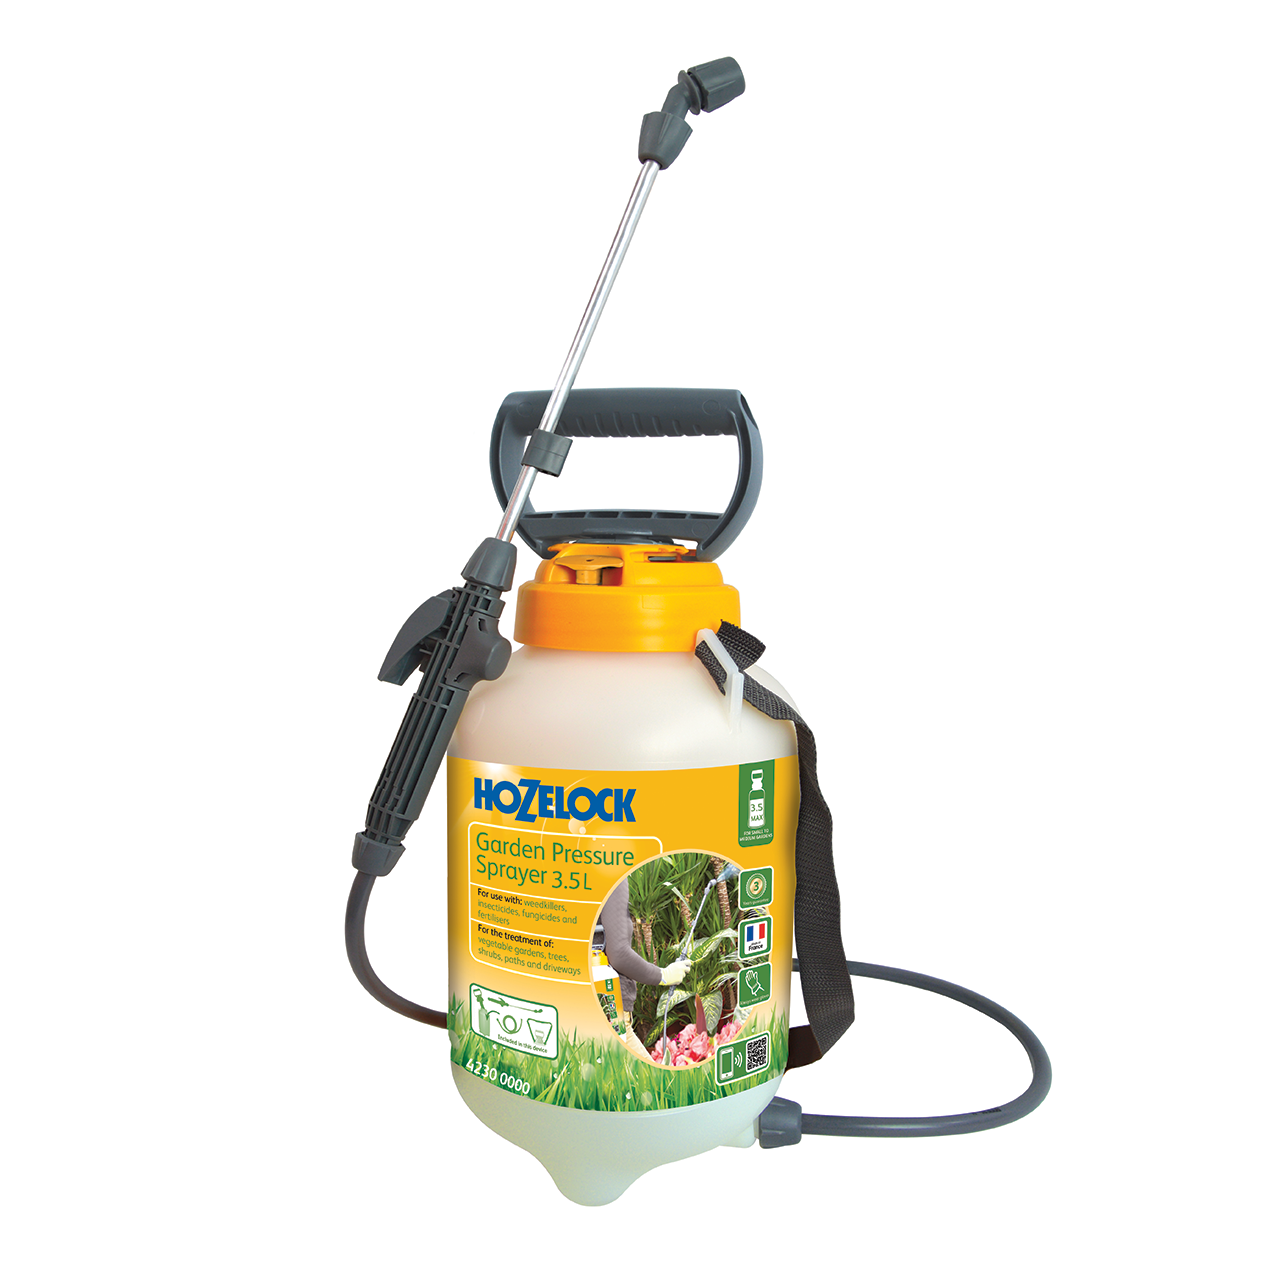 1.3 Gallon/5L Garden Sprayer Portable Lawn and Garden Sprayer with Rod Handle and Adjustable Shoulder Strap Pressure Relief Valve for Garden Work 